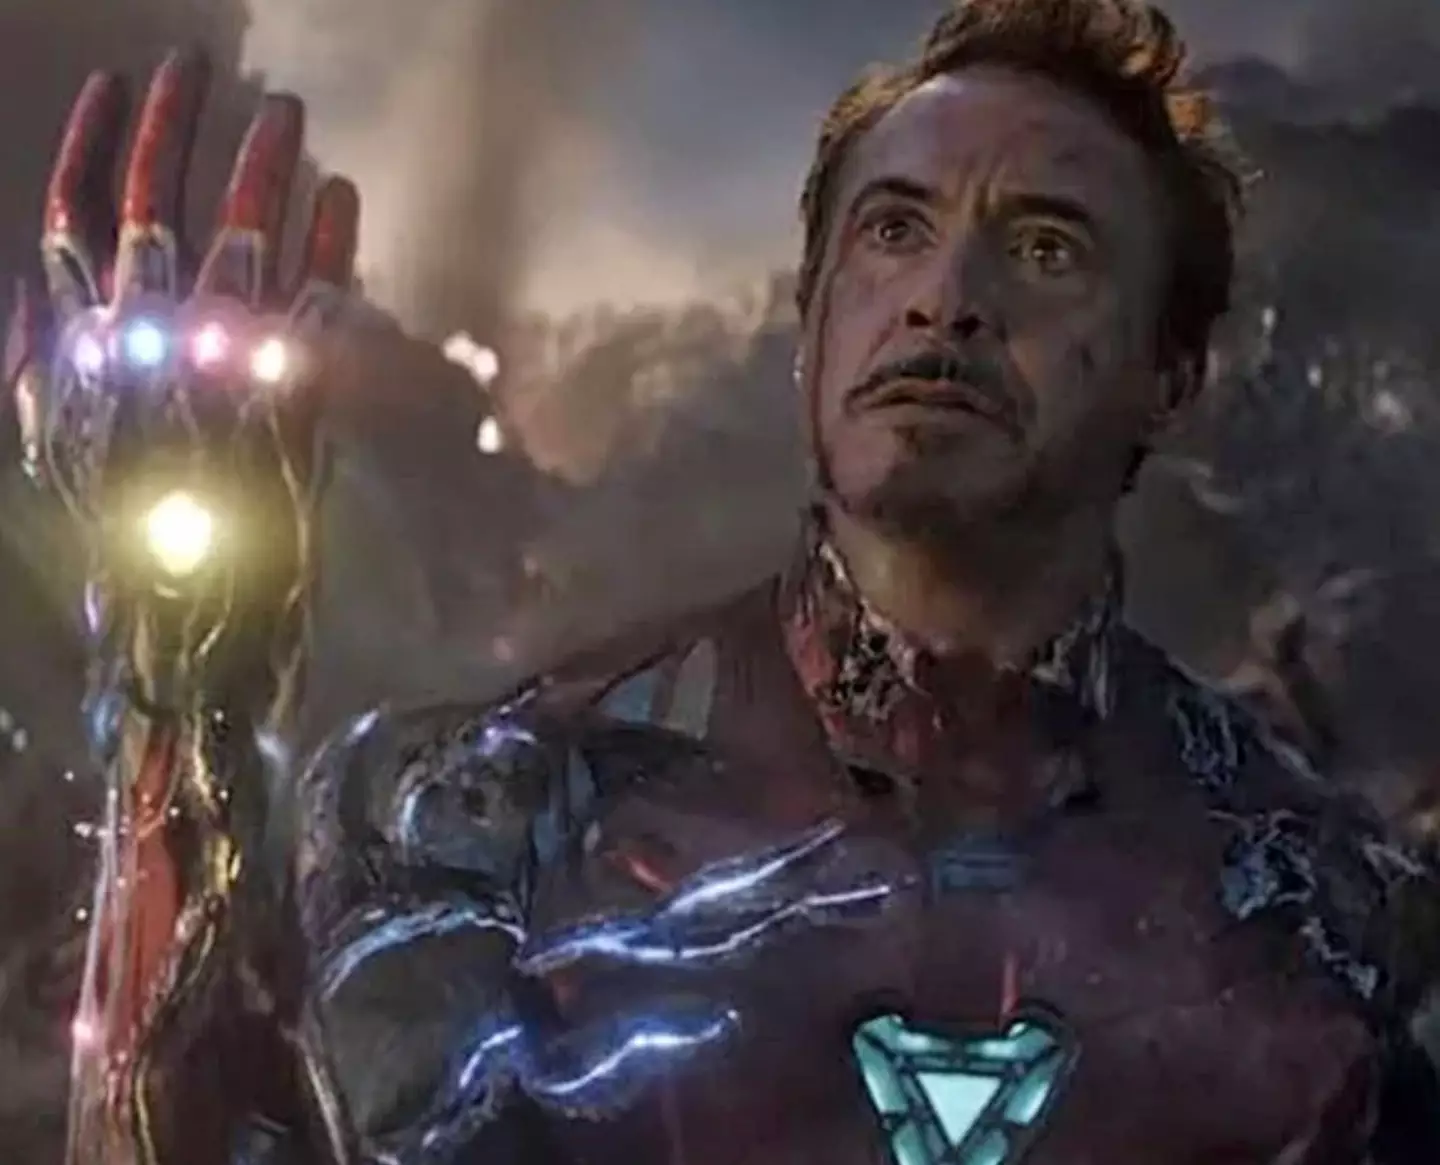 Robert Downey Jr. starred as Iron Man in the MCU. Marvel/Disney